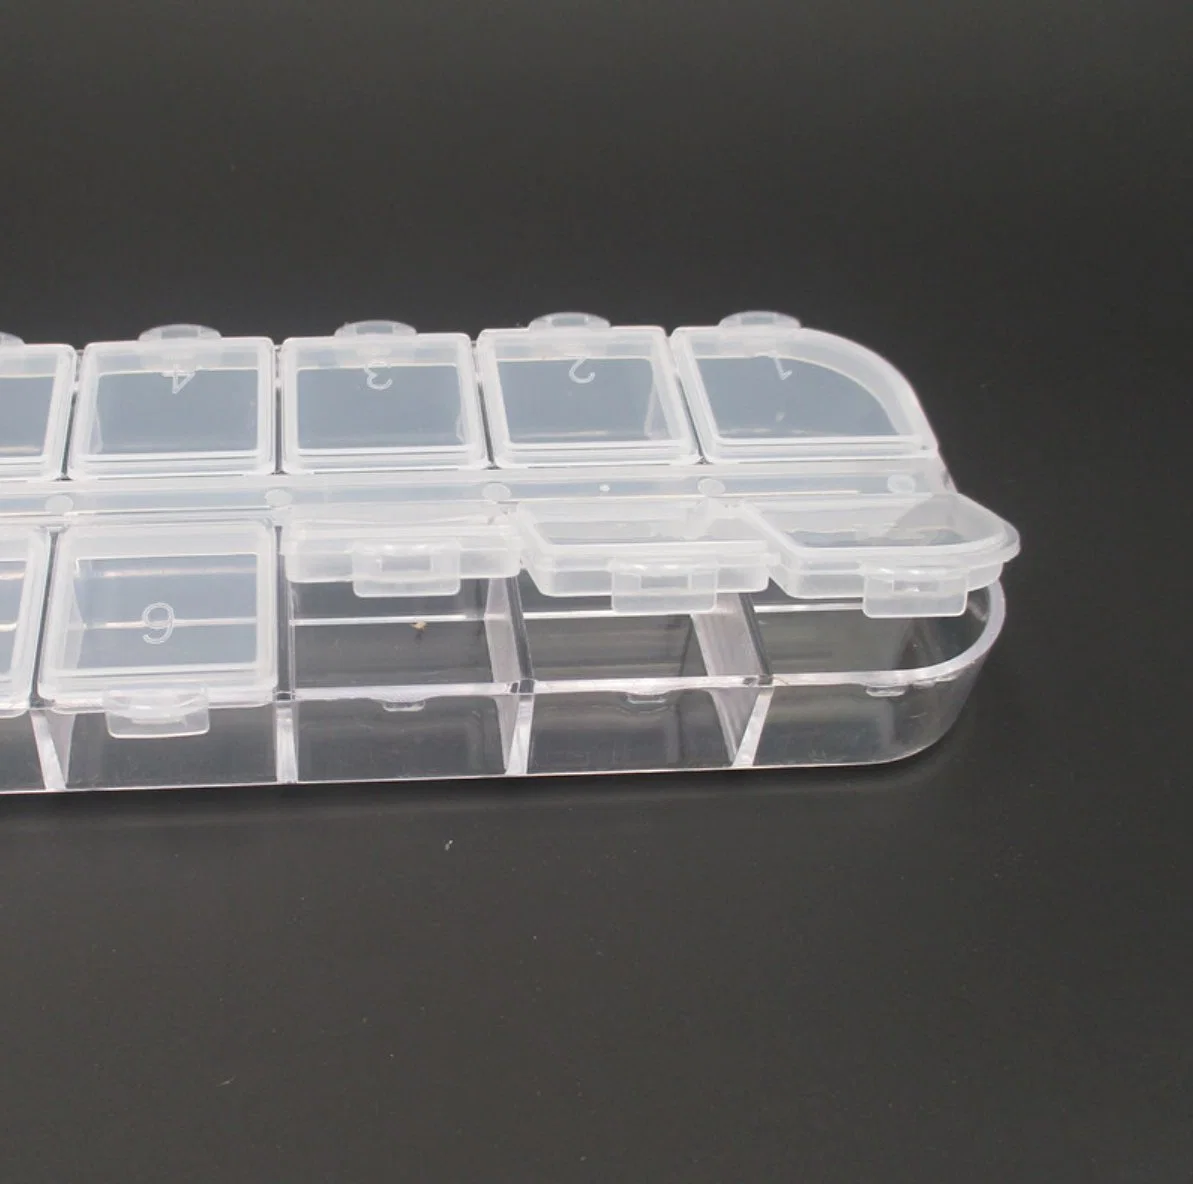 7 dias Comprimido Box Weekly Pill Organizer, Pill Case, Medicine Pill Box